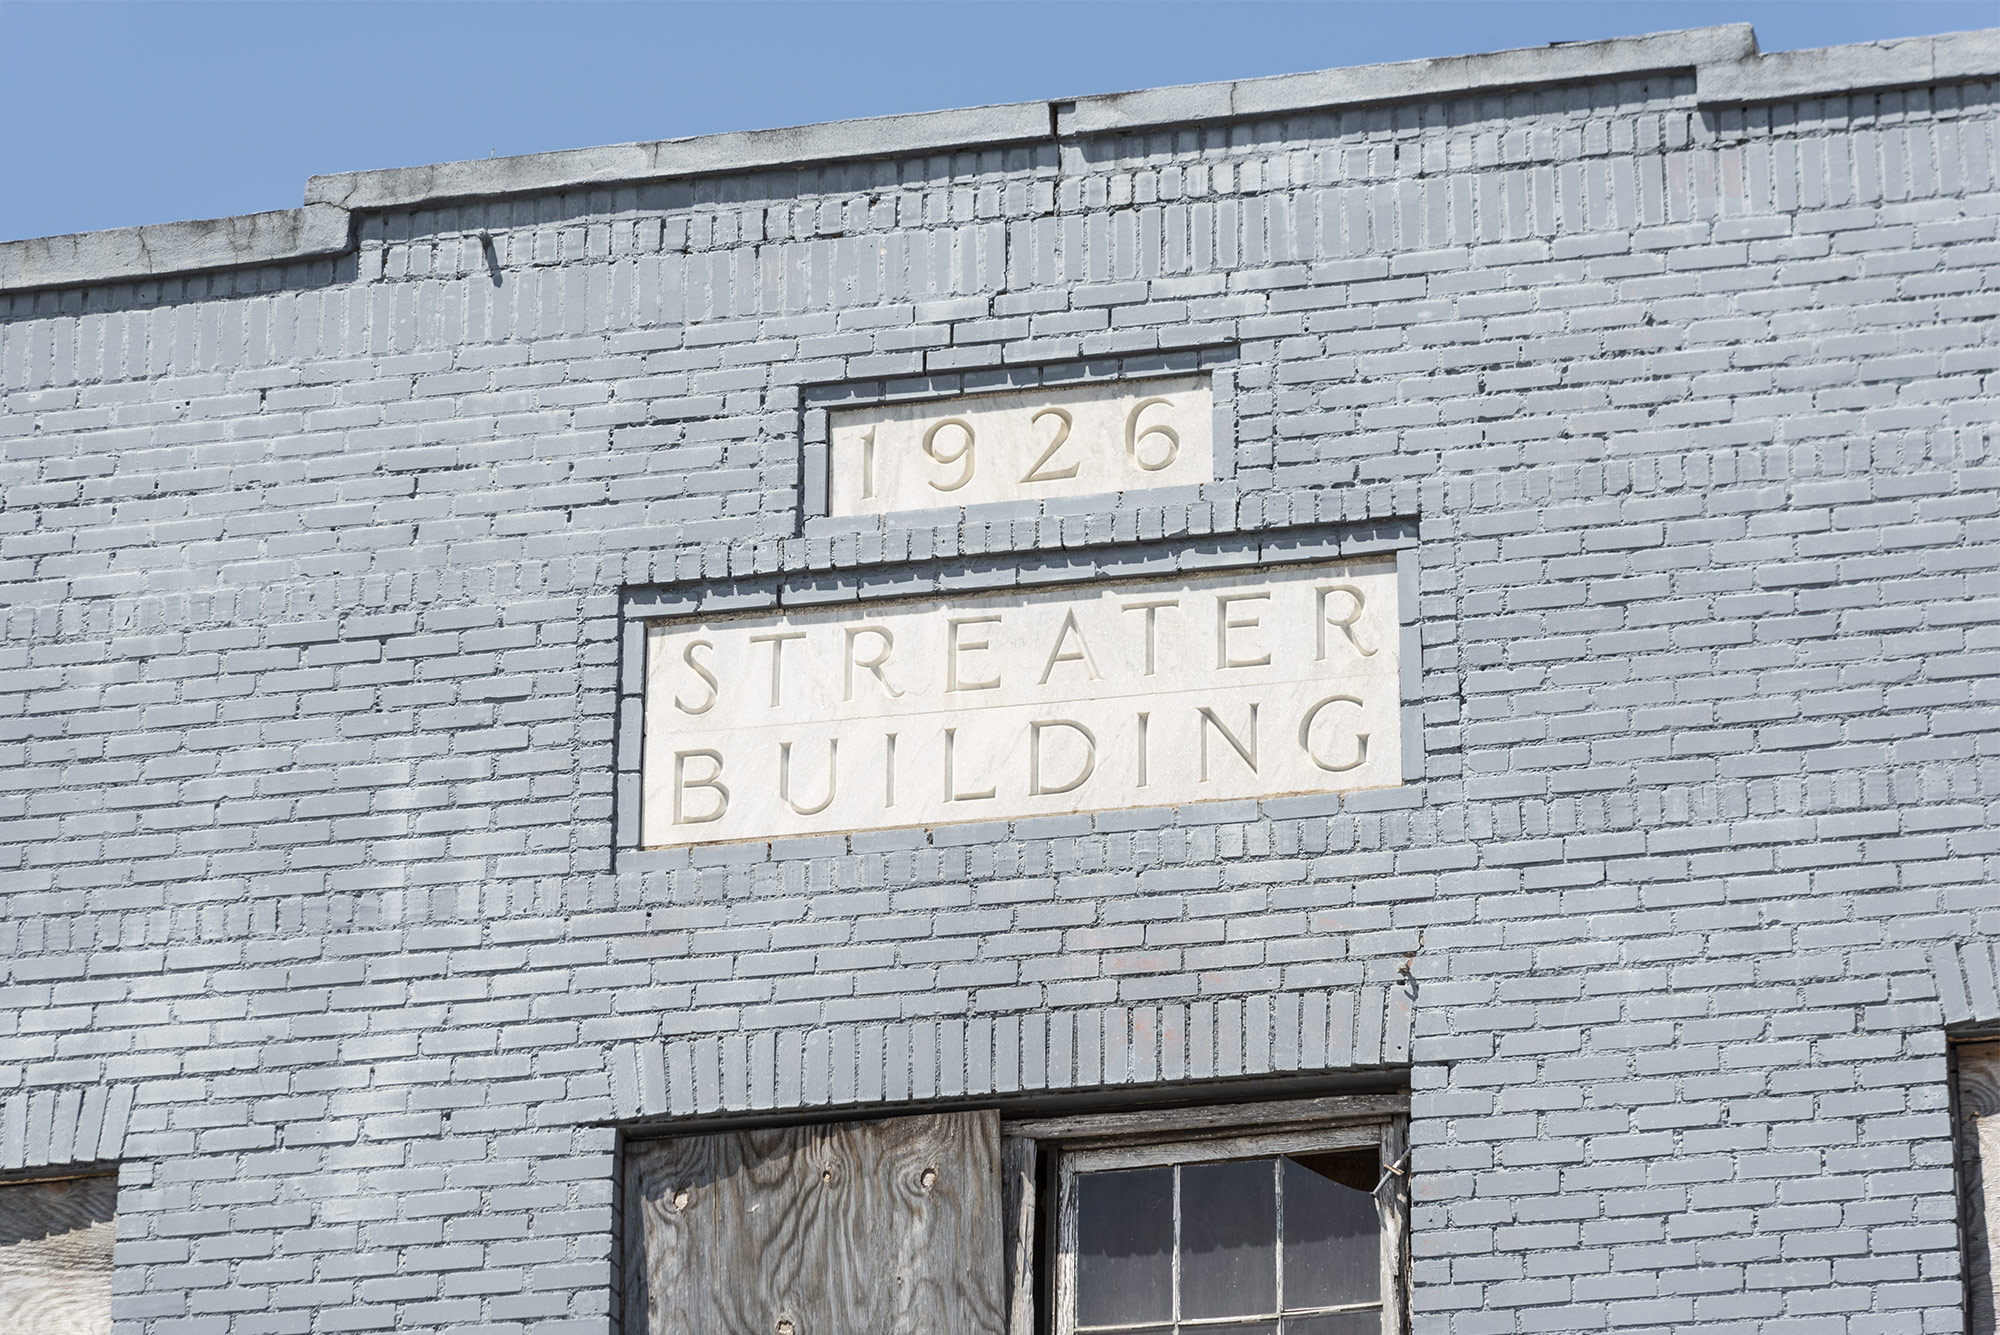 Streater Building exterior plaque